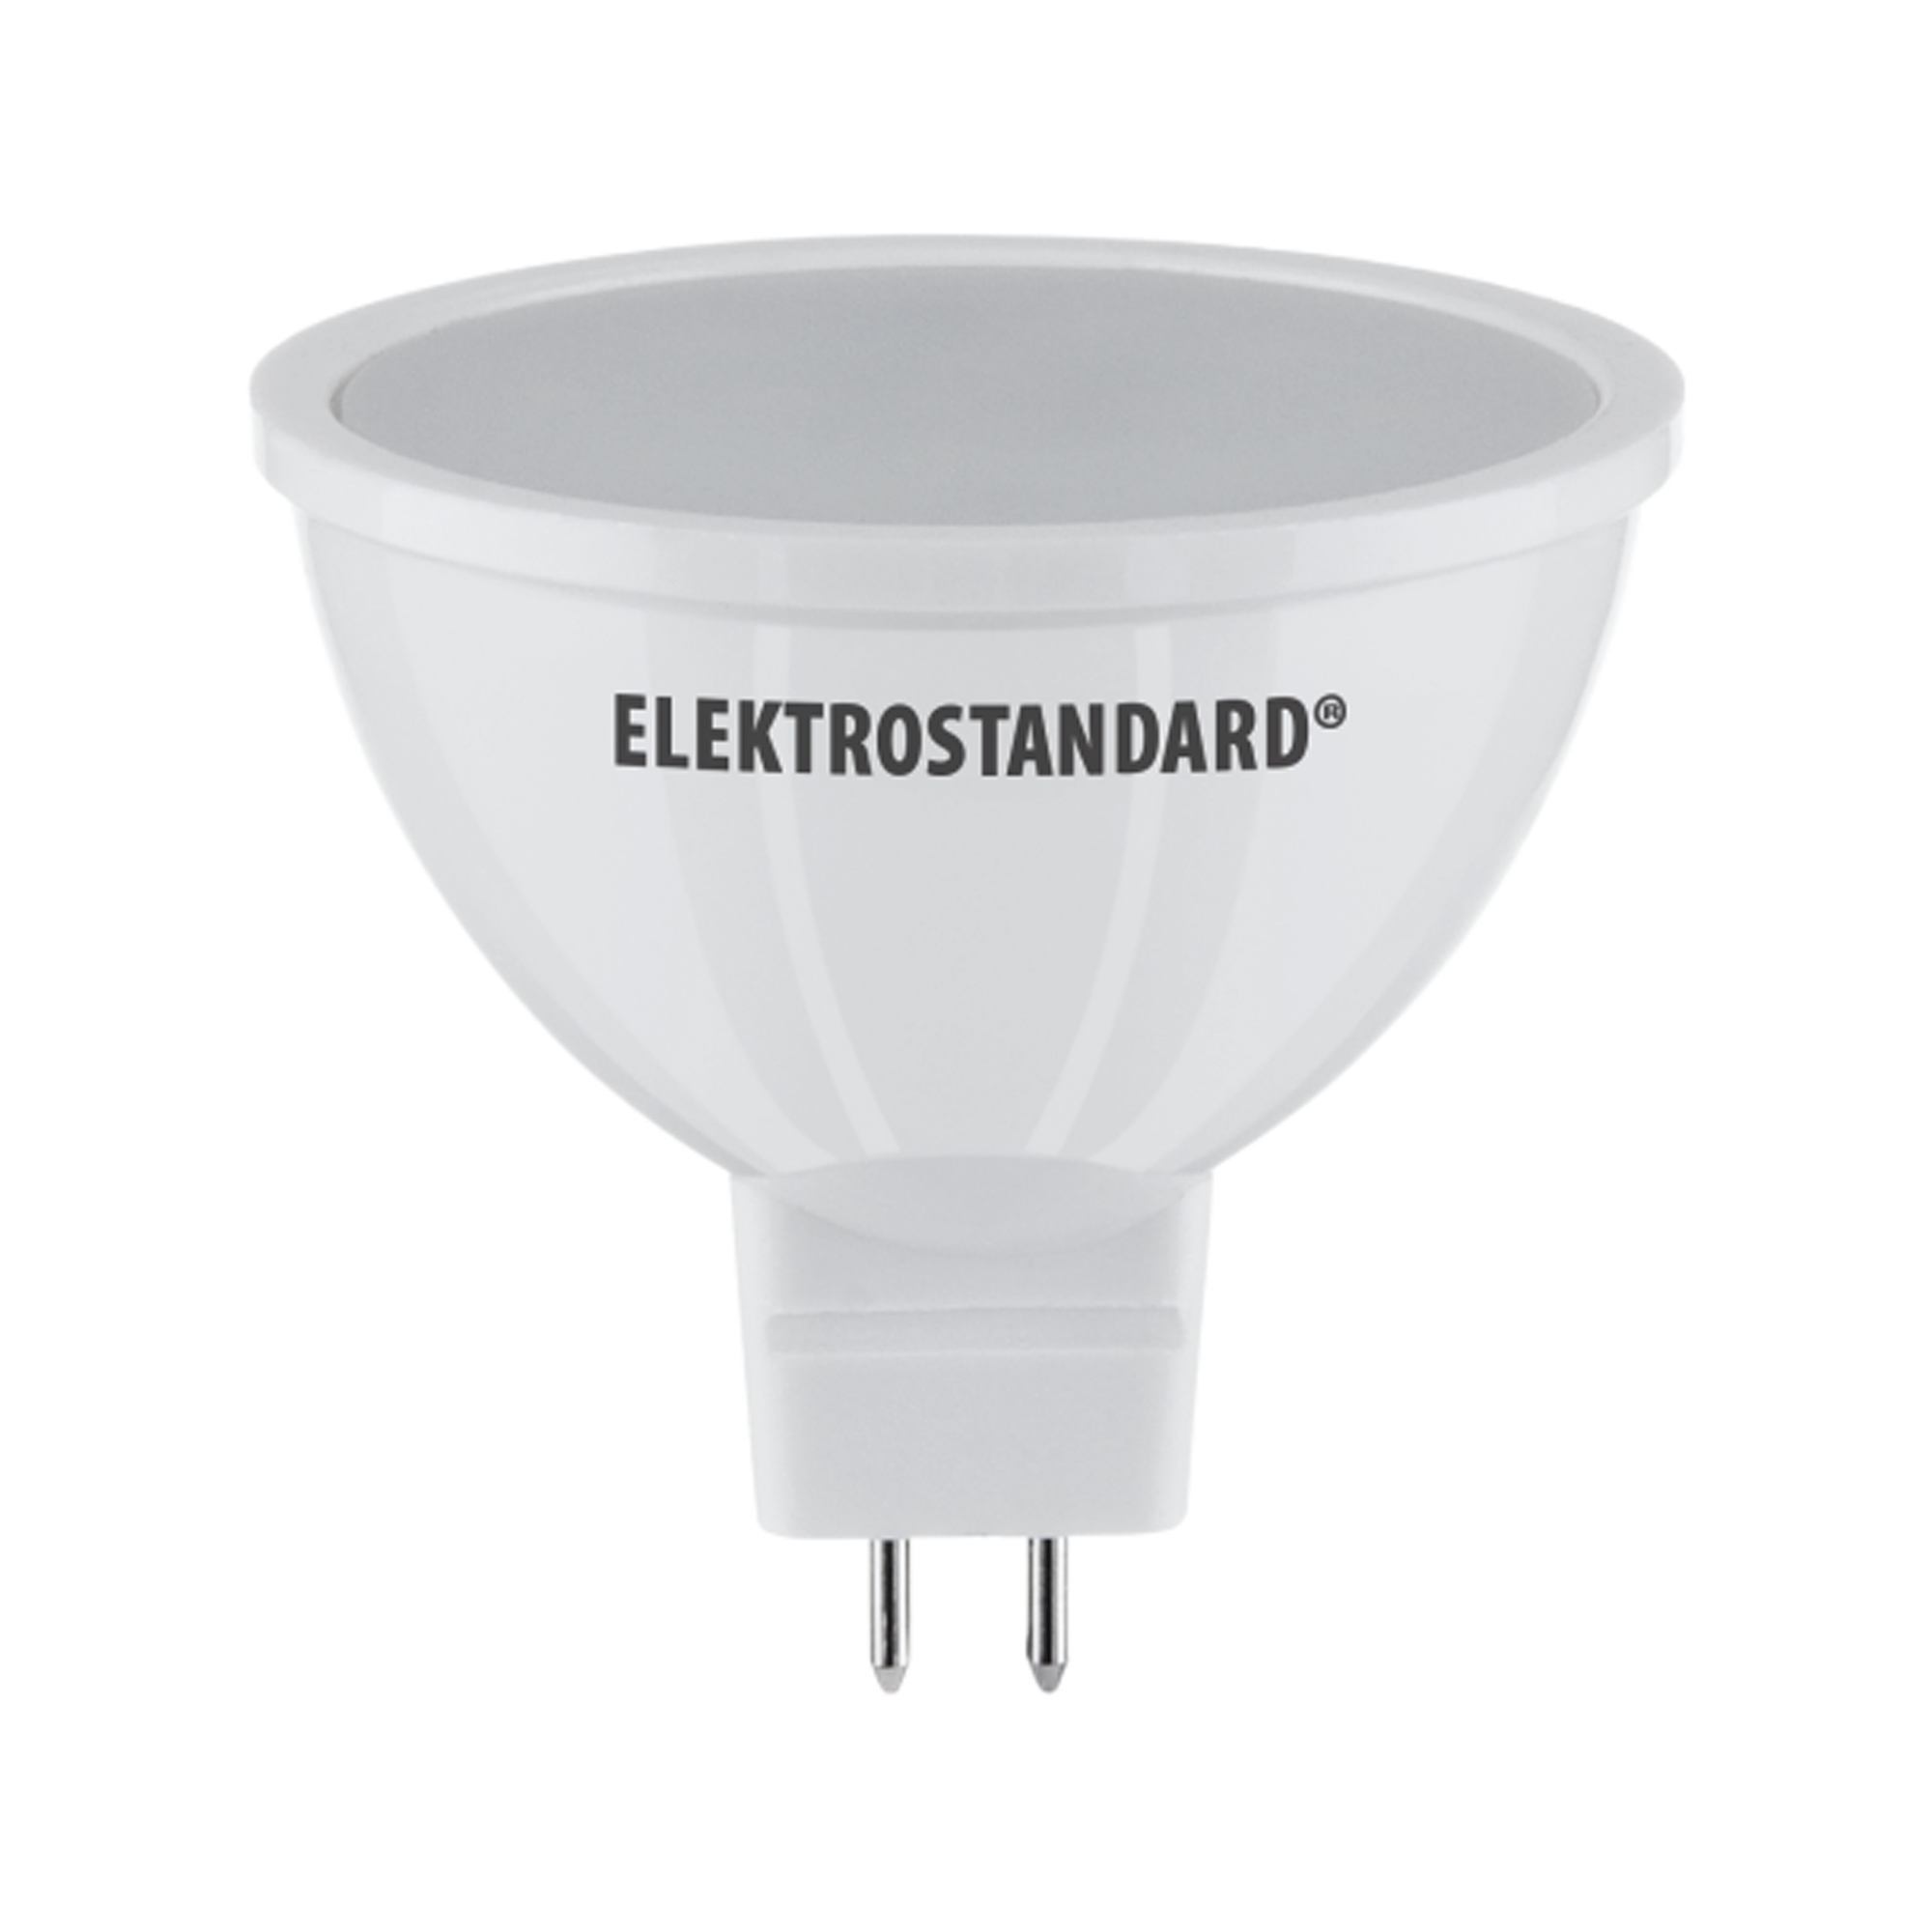 Светодиодная лампа JCDR01 7W 220V 6500K Elektrostandard BLG5306 a049688